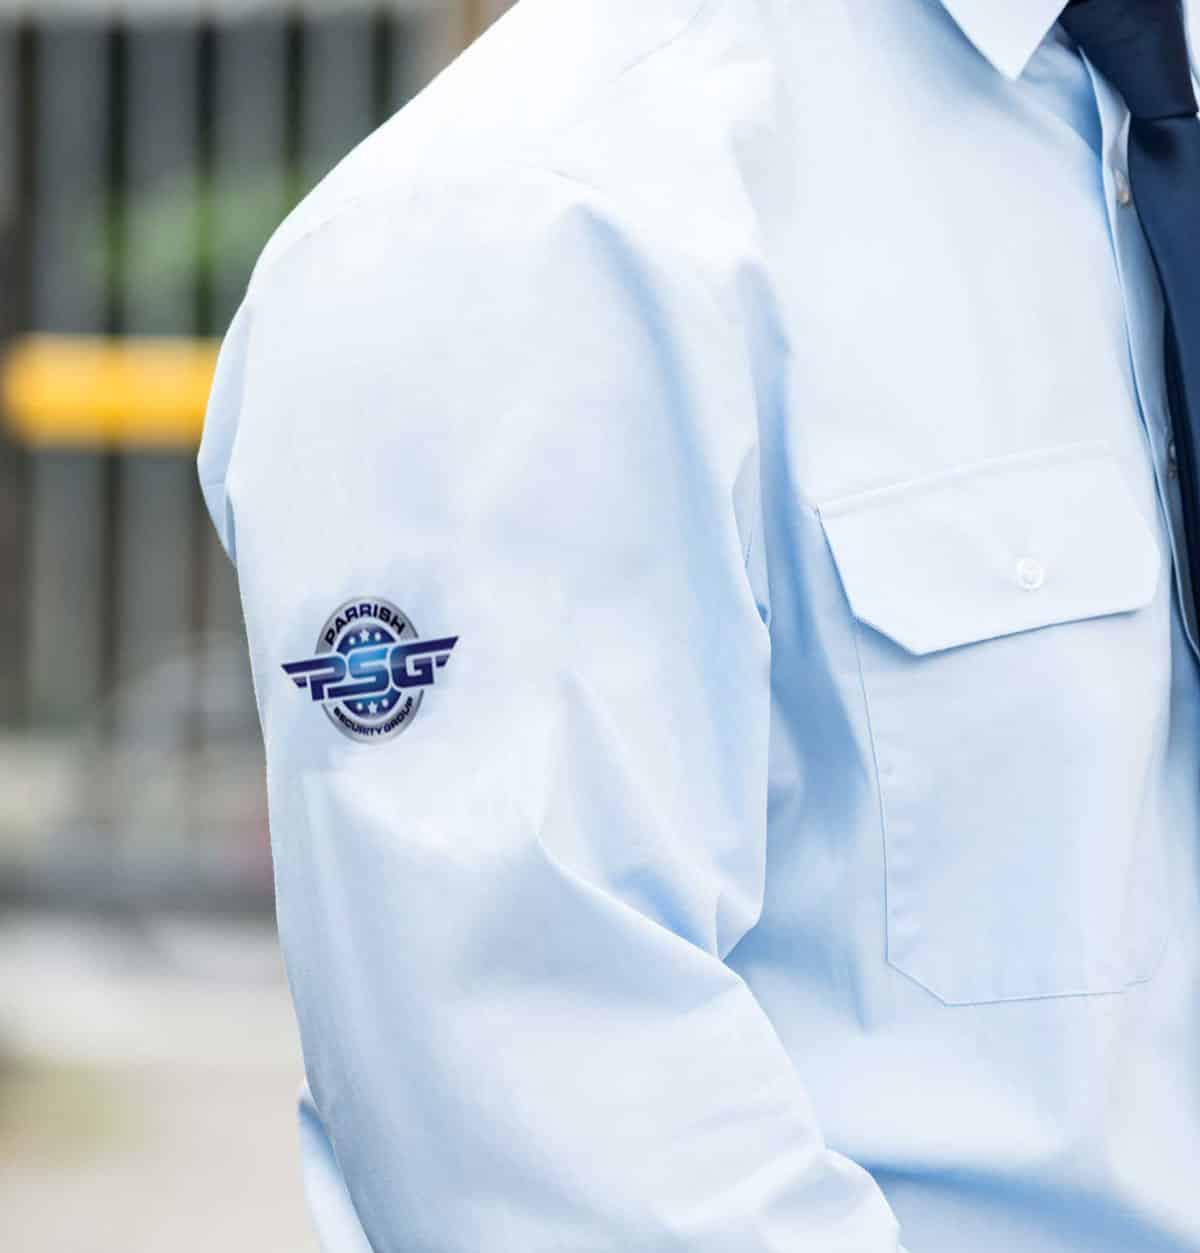 PSG security guard uniform